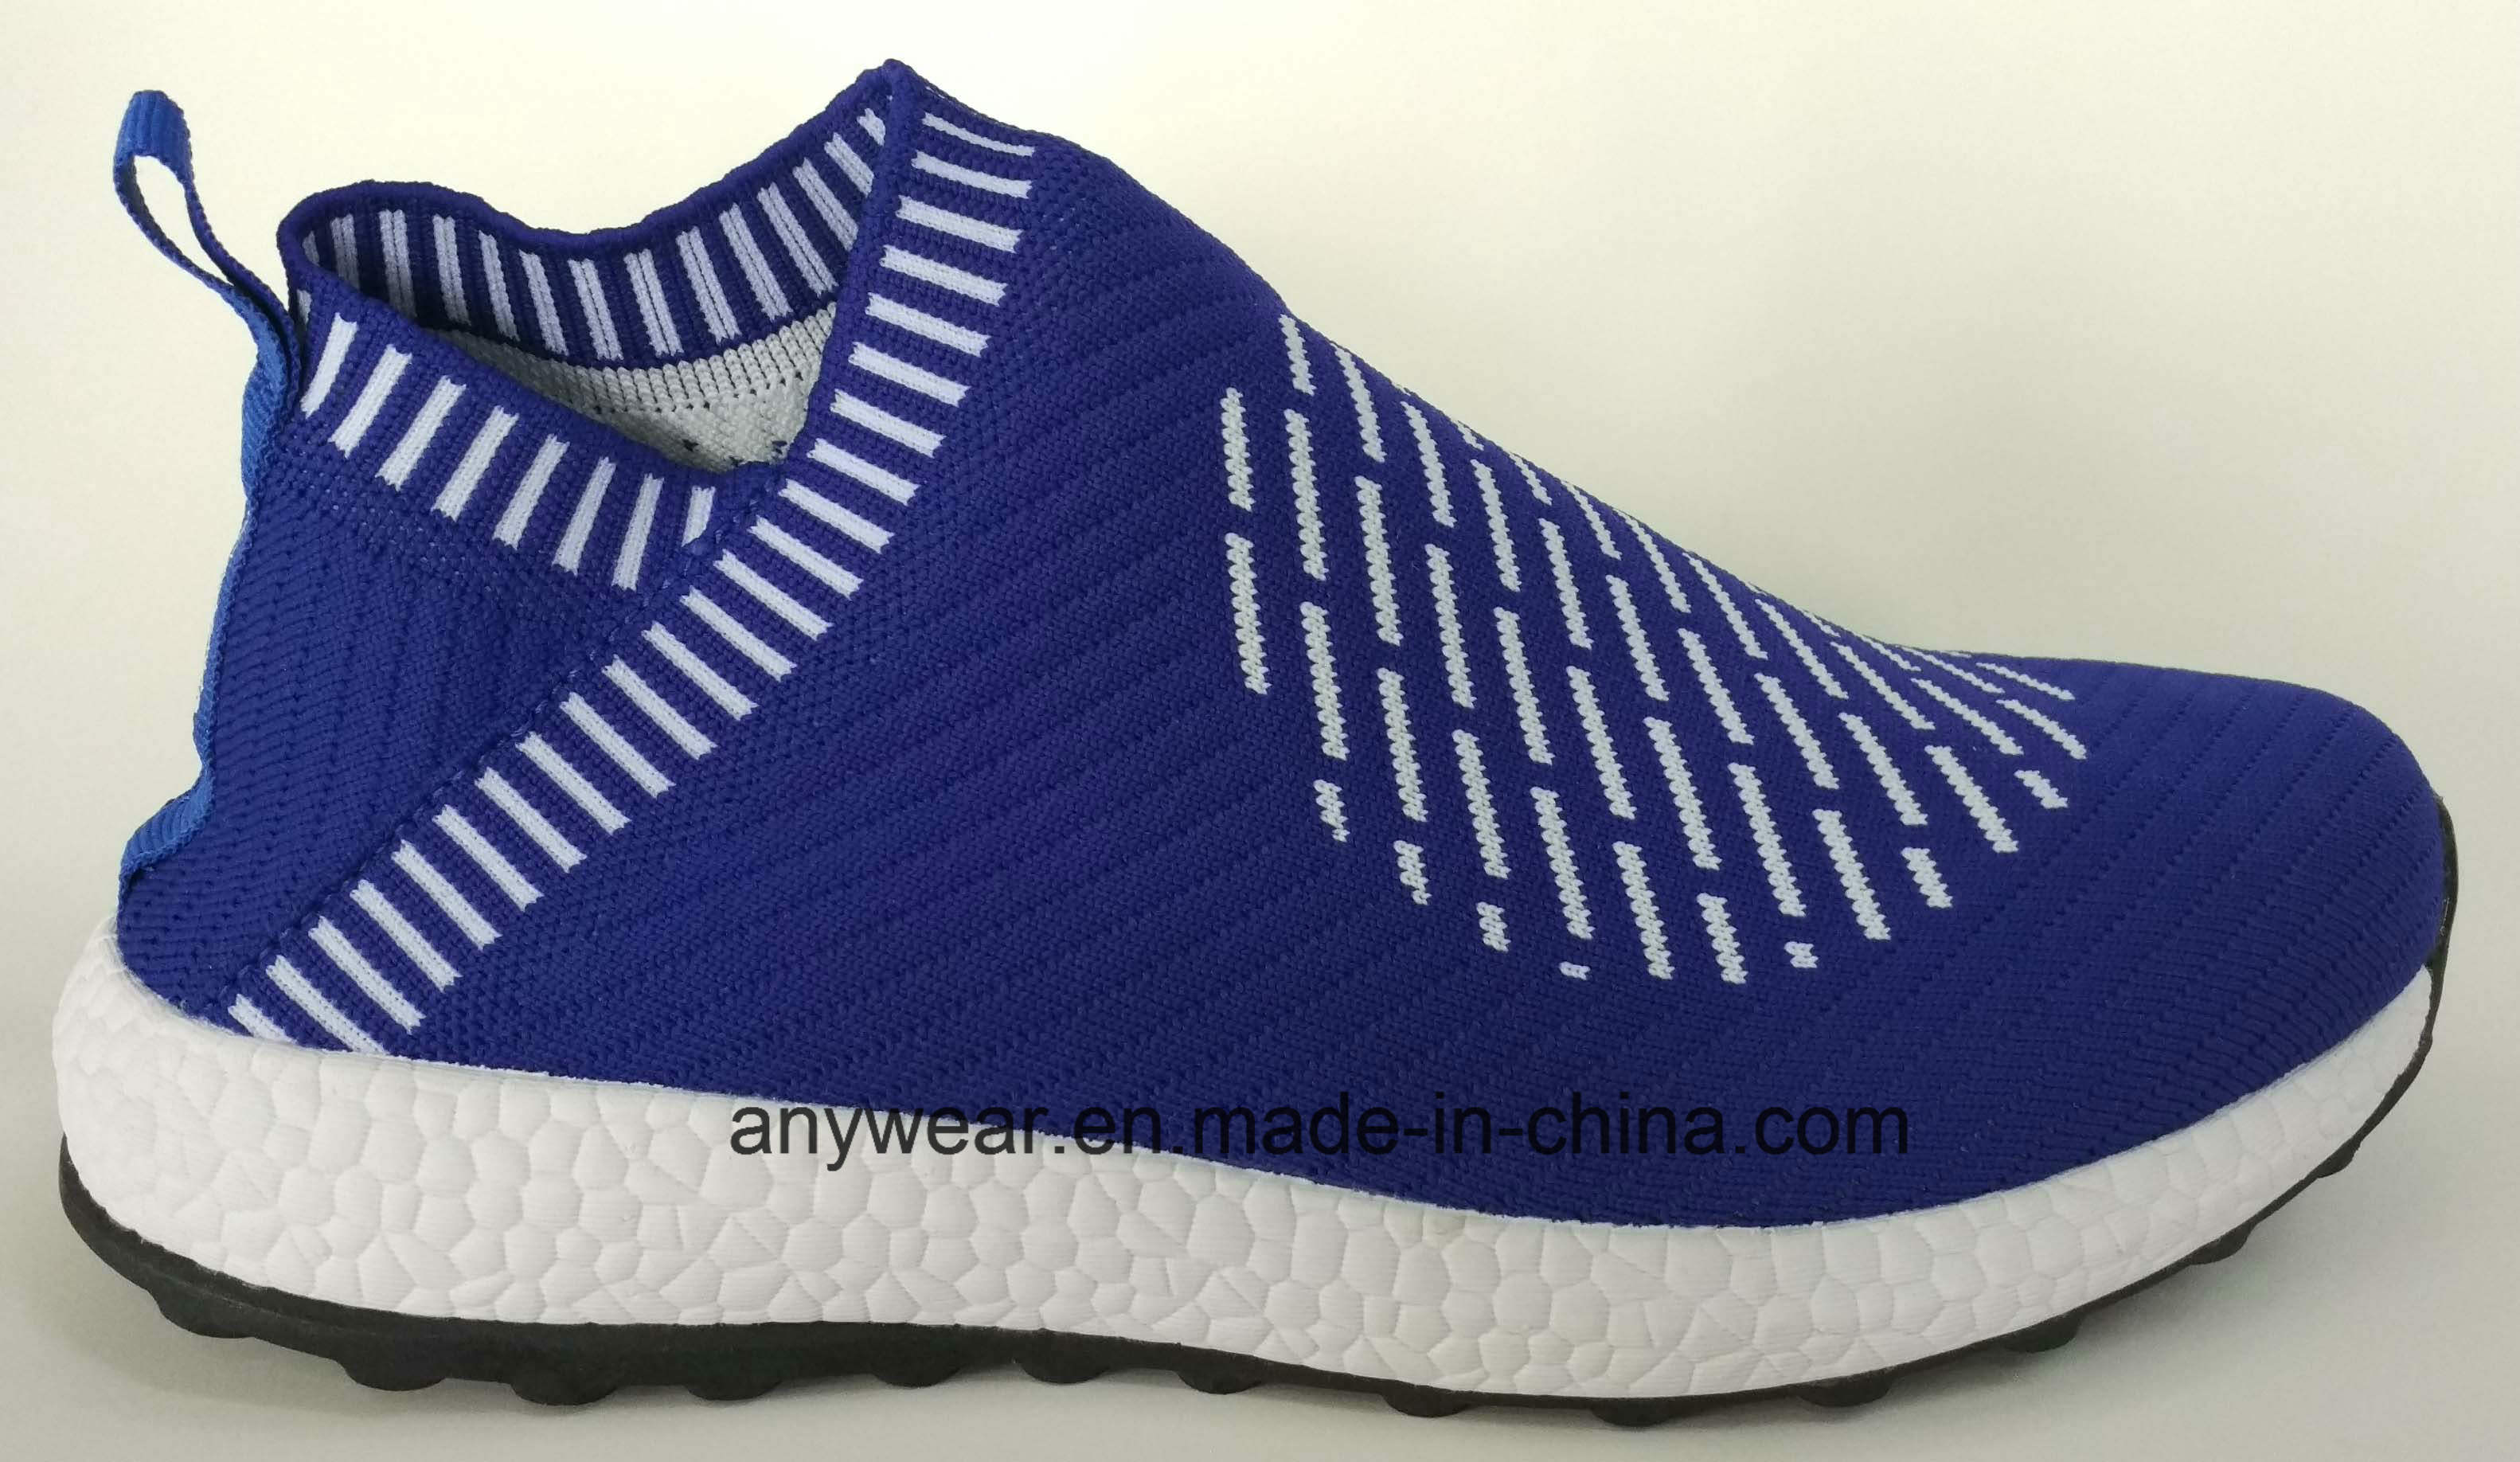 Flyknitting Sports Footwear Comfort EVA Running Shoes (817-171)